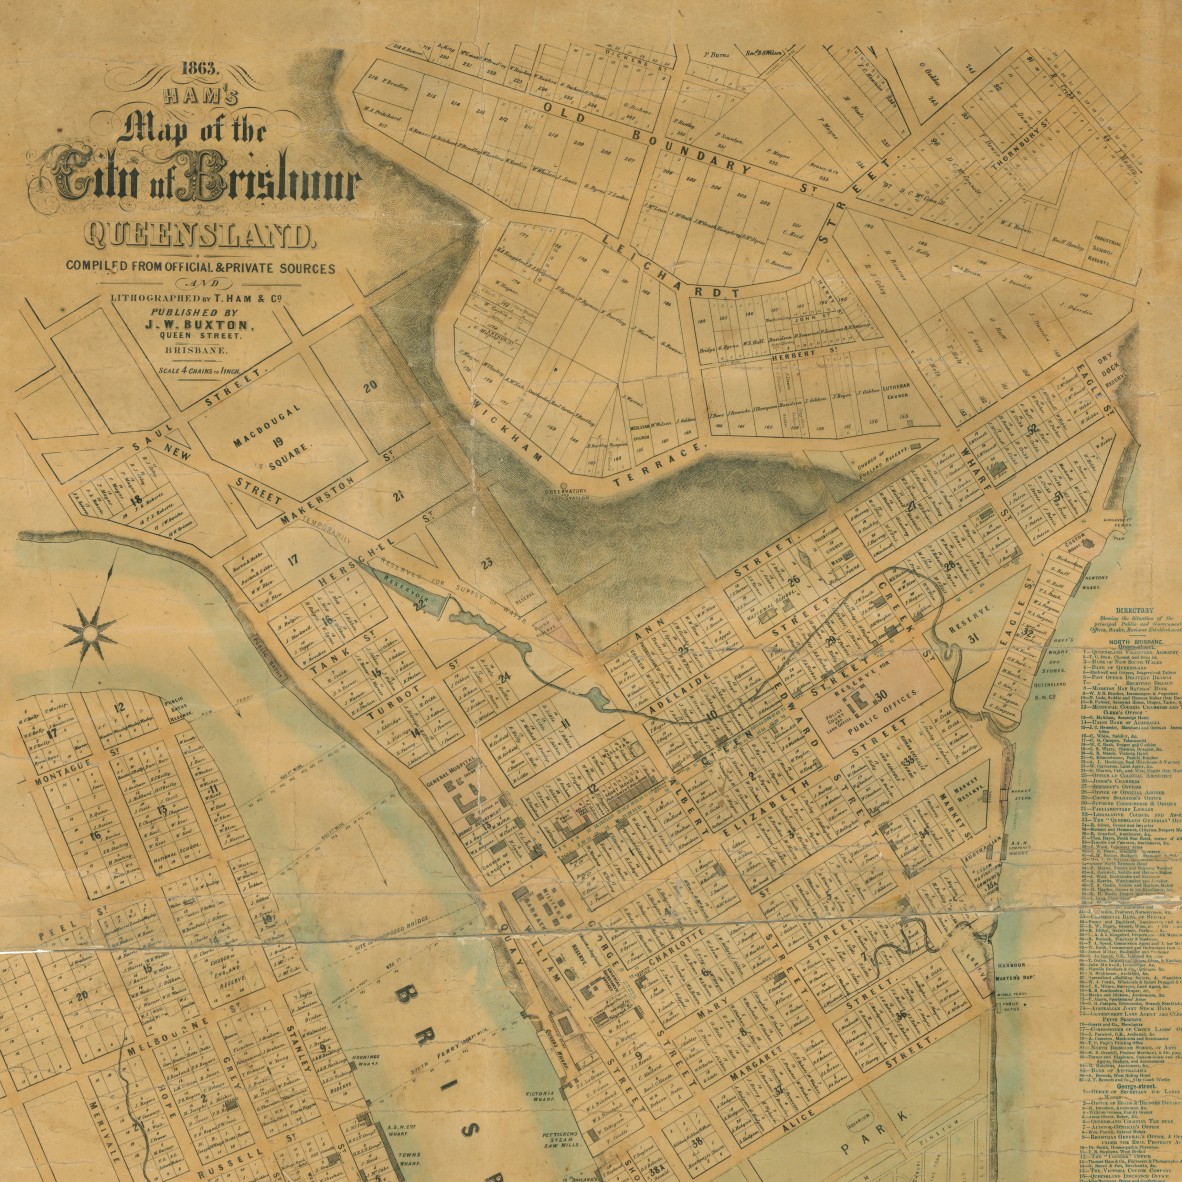 Hams map of the city of Brisbane Queensland 1863